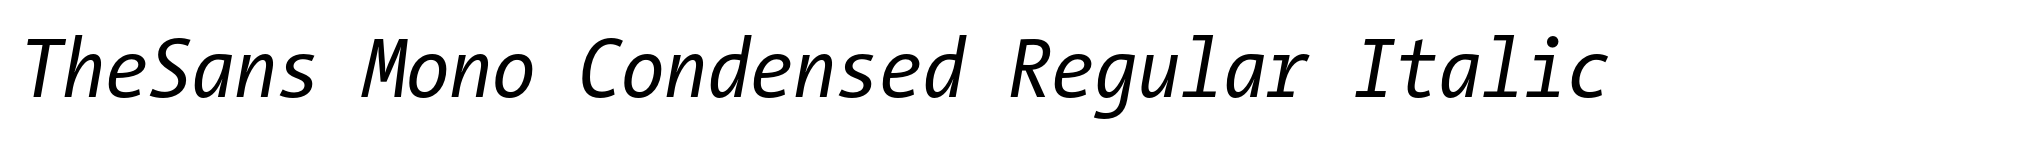 TheSans Mono Condensed Regular Italic image